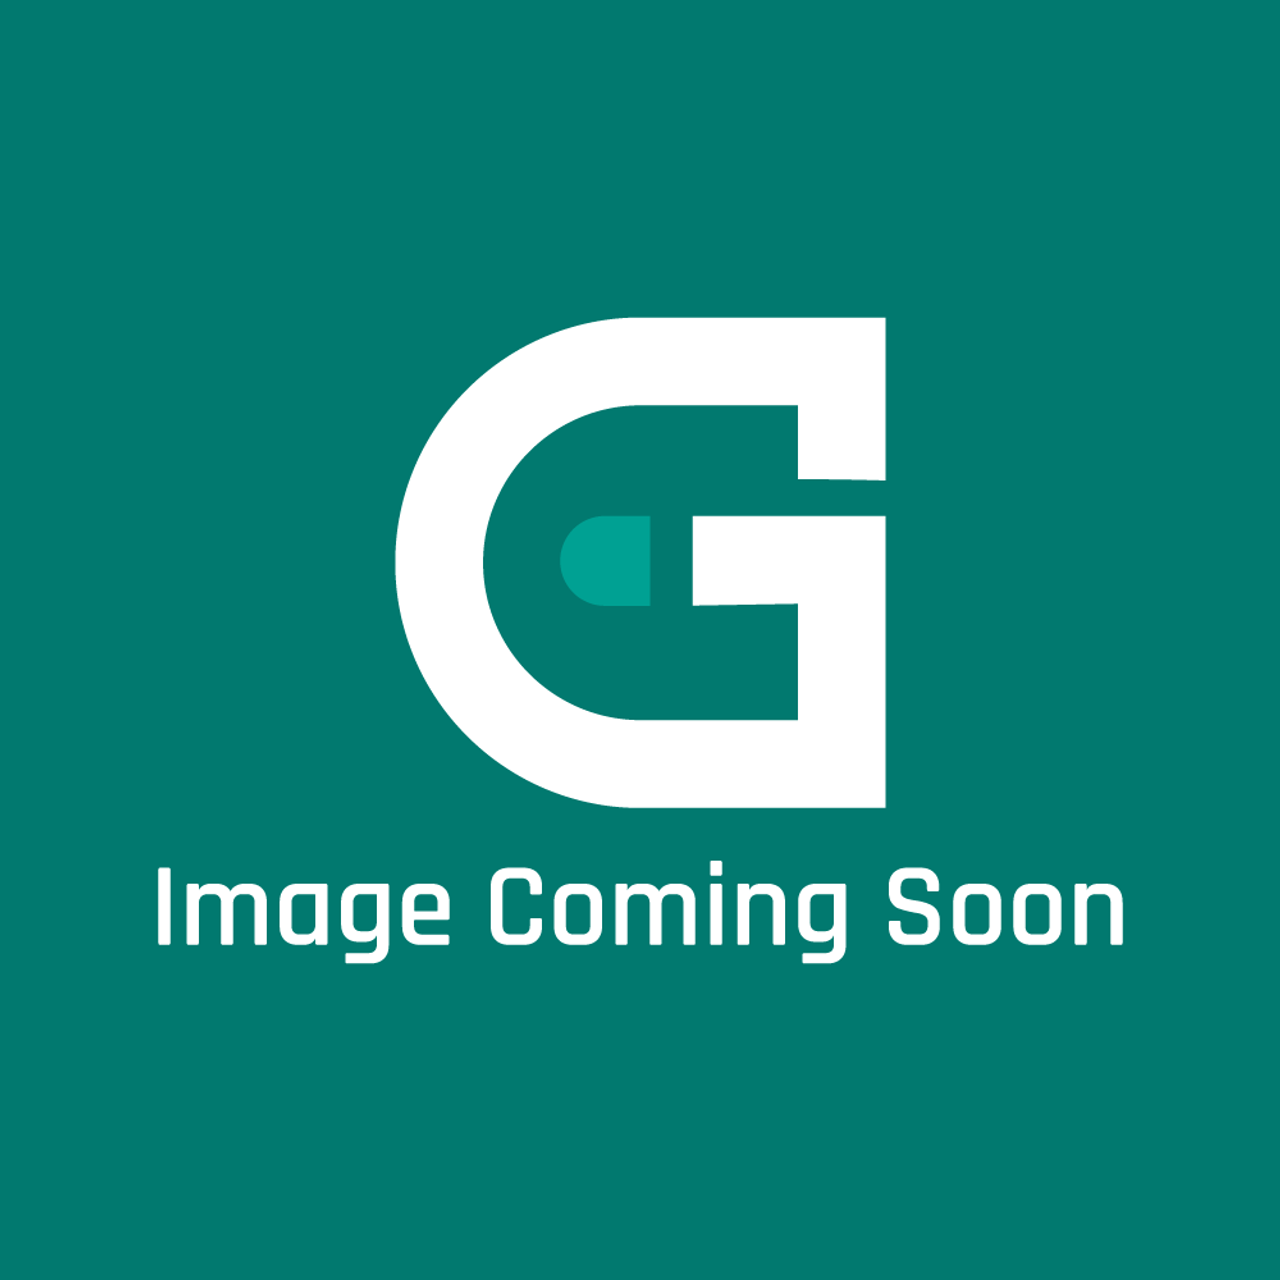 AGA Marvel R4662 - Ext Air Intake Cfa02009/001 - Image Coming Soon!